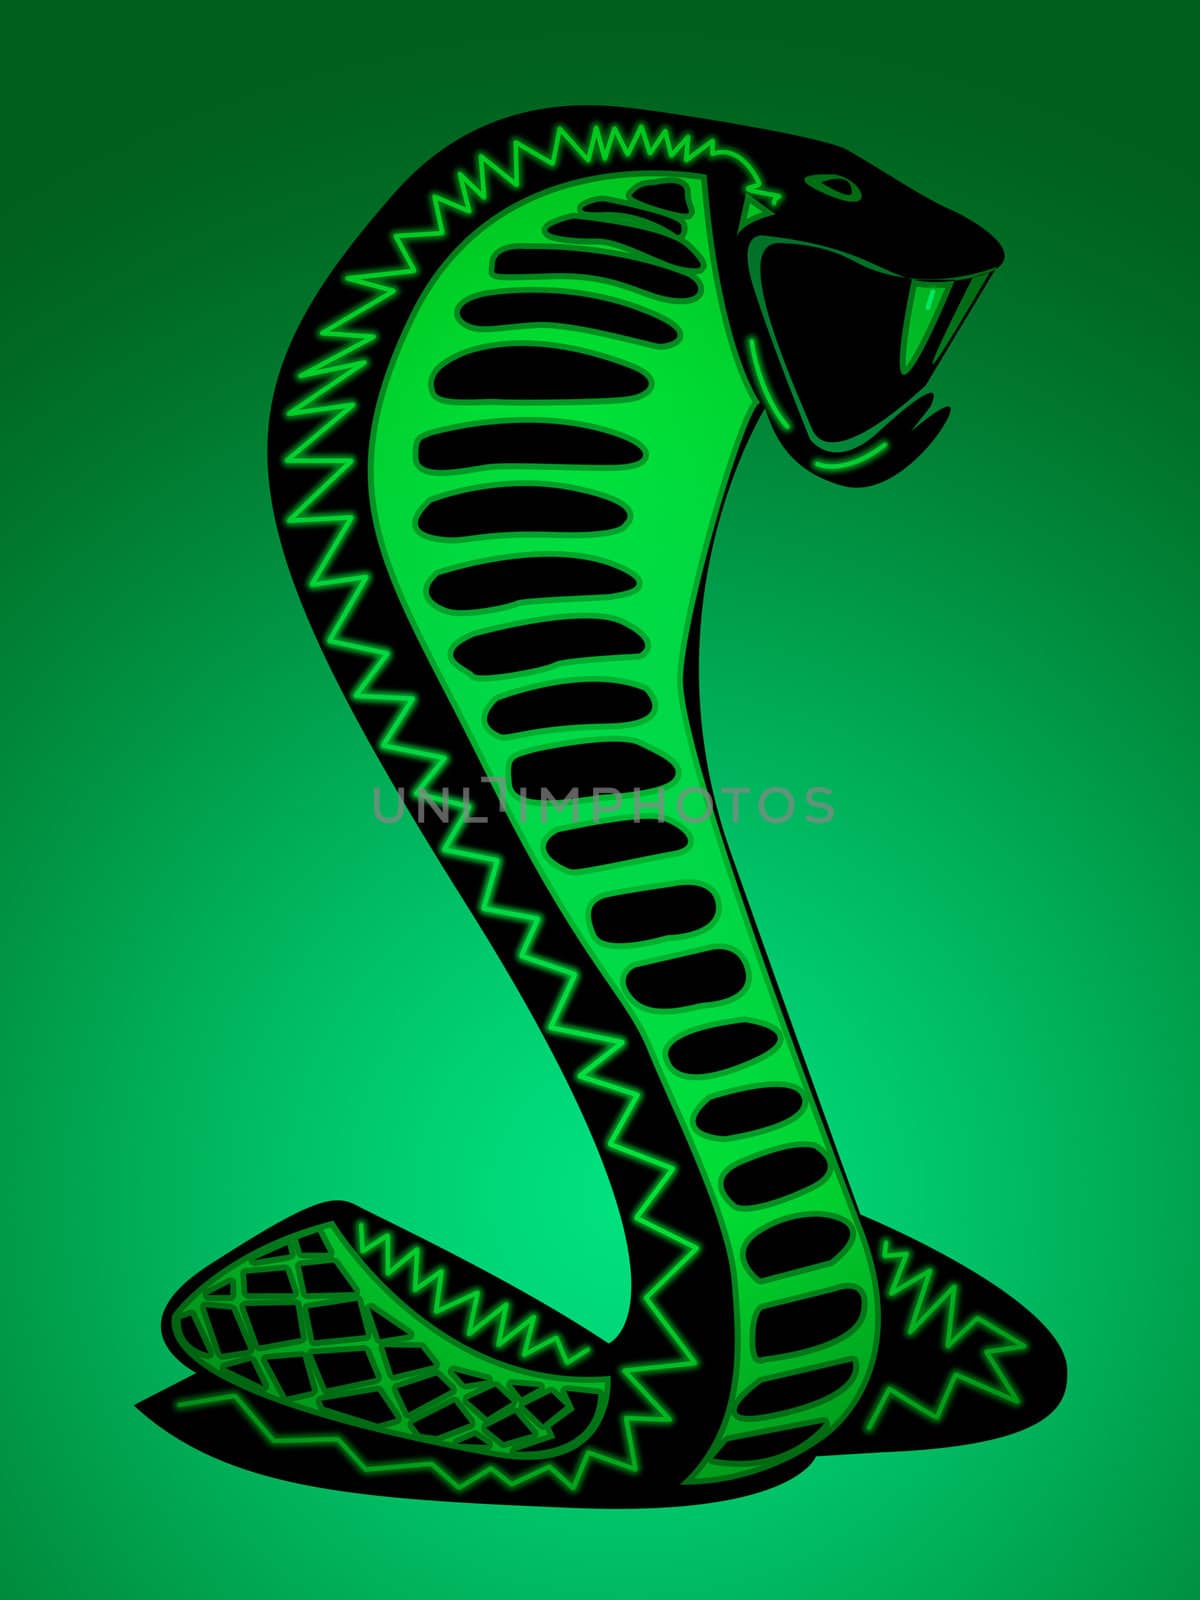 Funky Snake Illustration Design on Green Background by bobbigmac